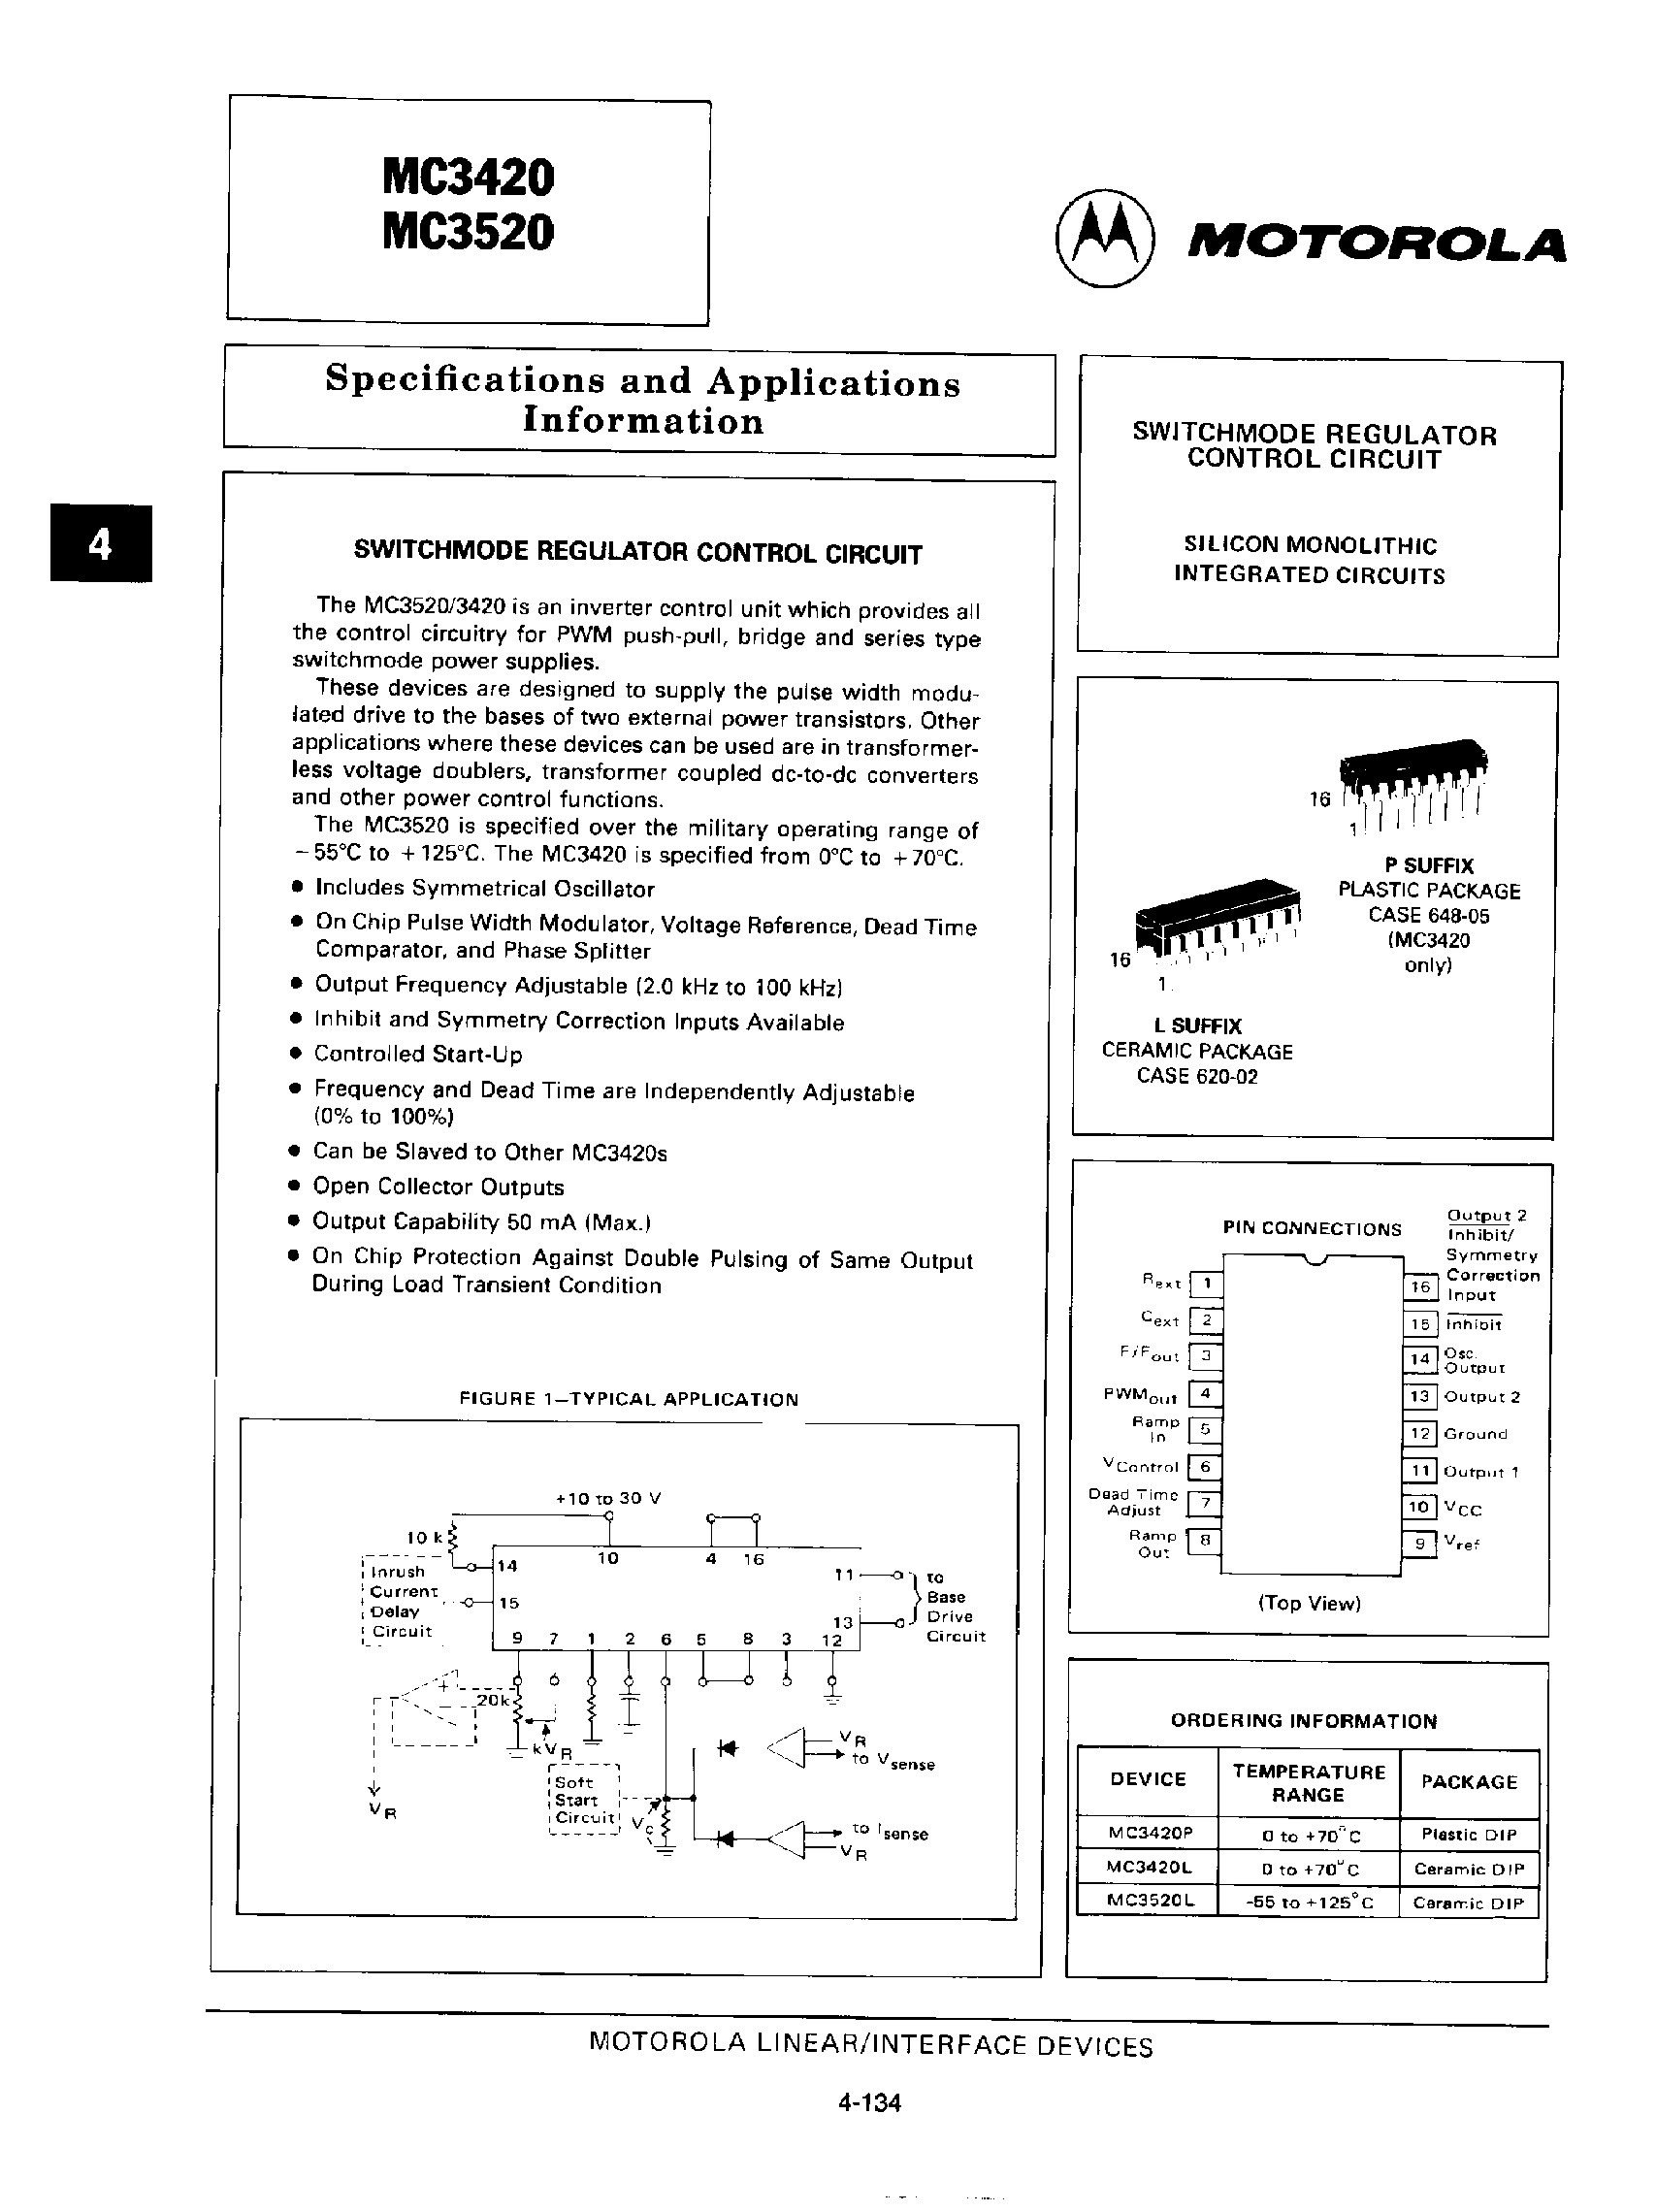 Datasheet MC3420 - (MC3420 / MC3520) SWITCHMODE REGULATOR CONTROL CIRCUIT page 1